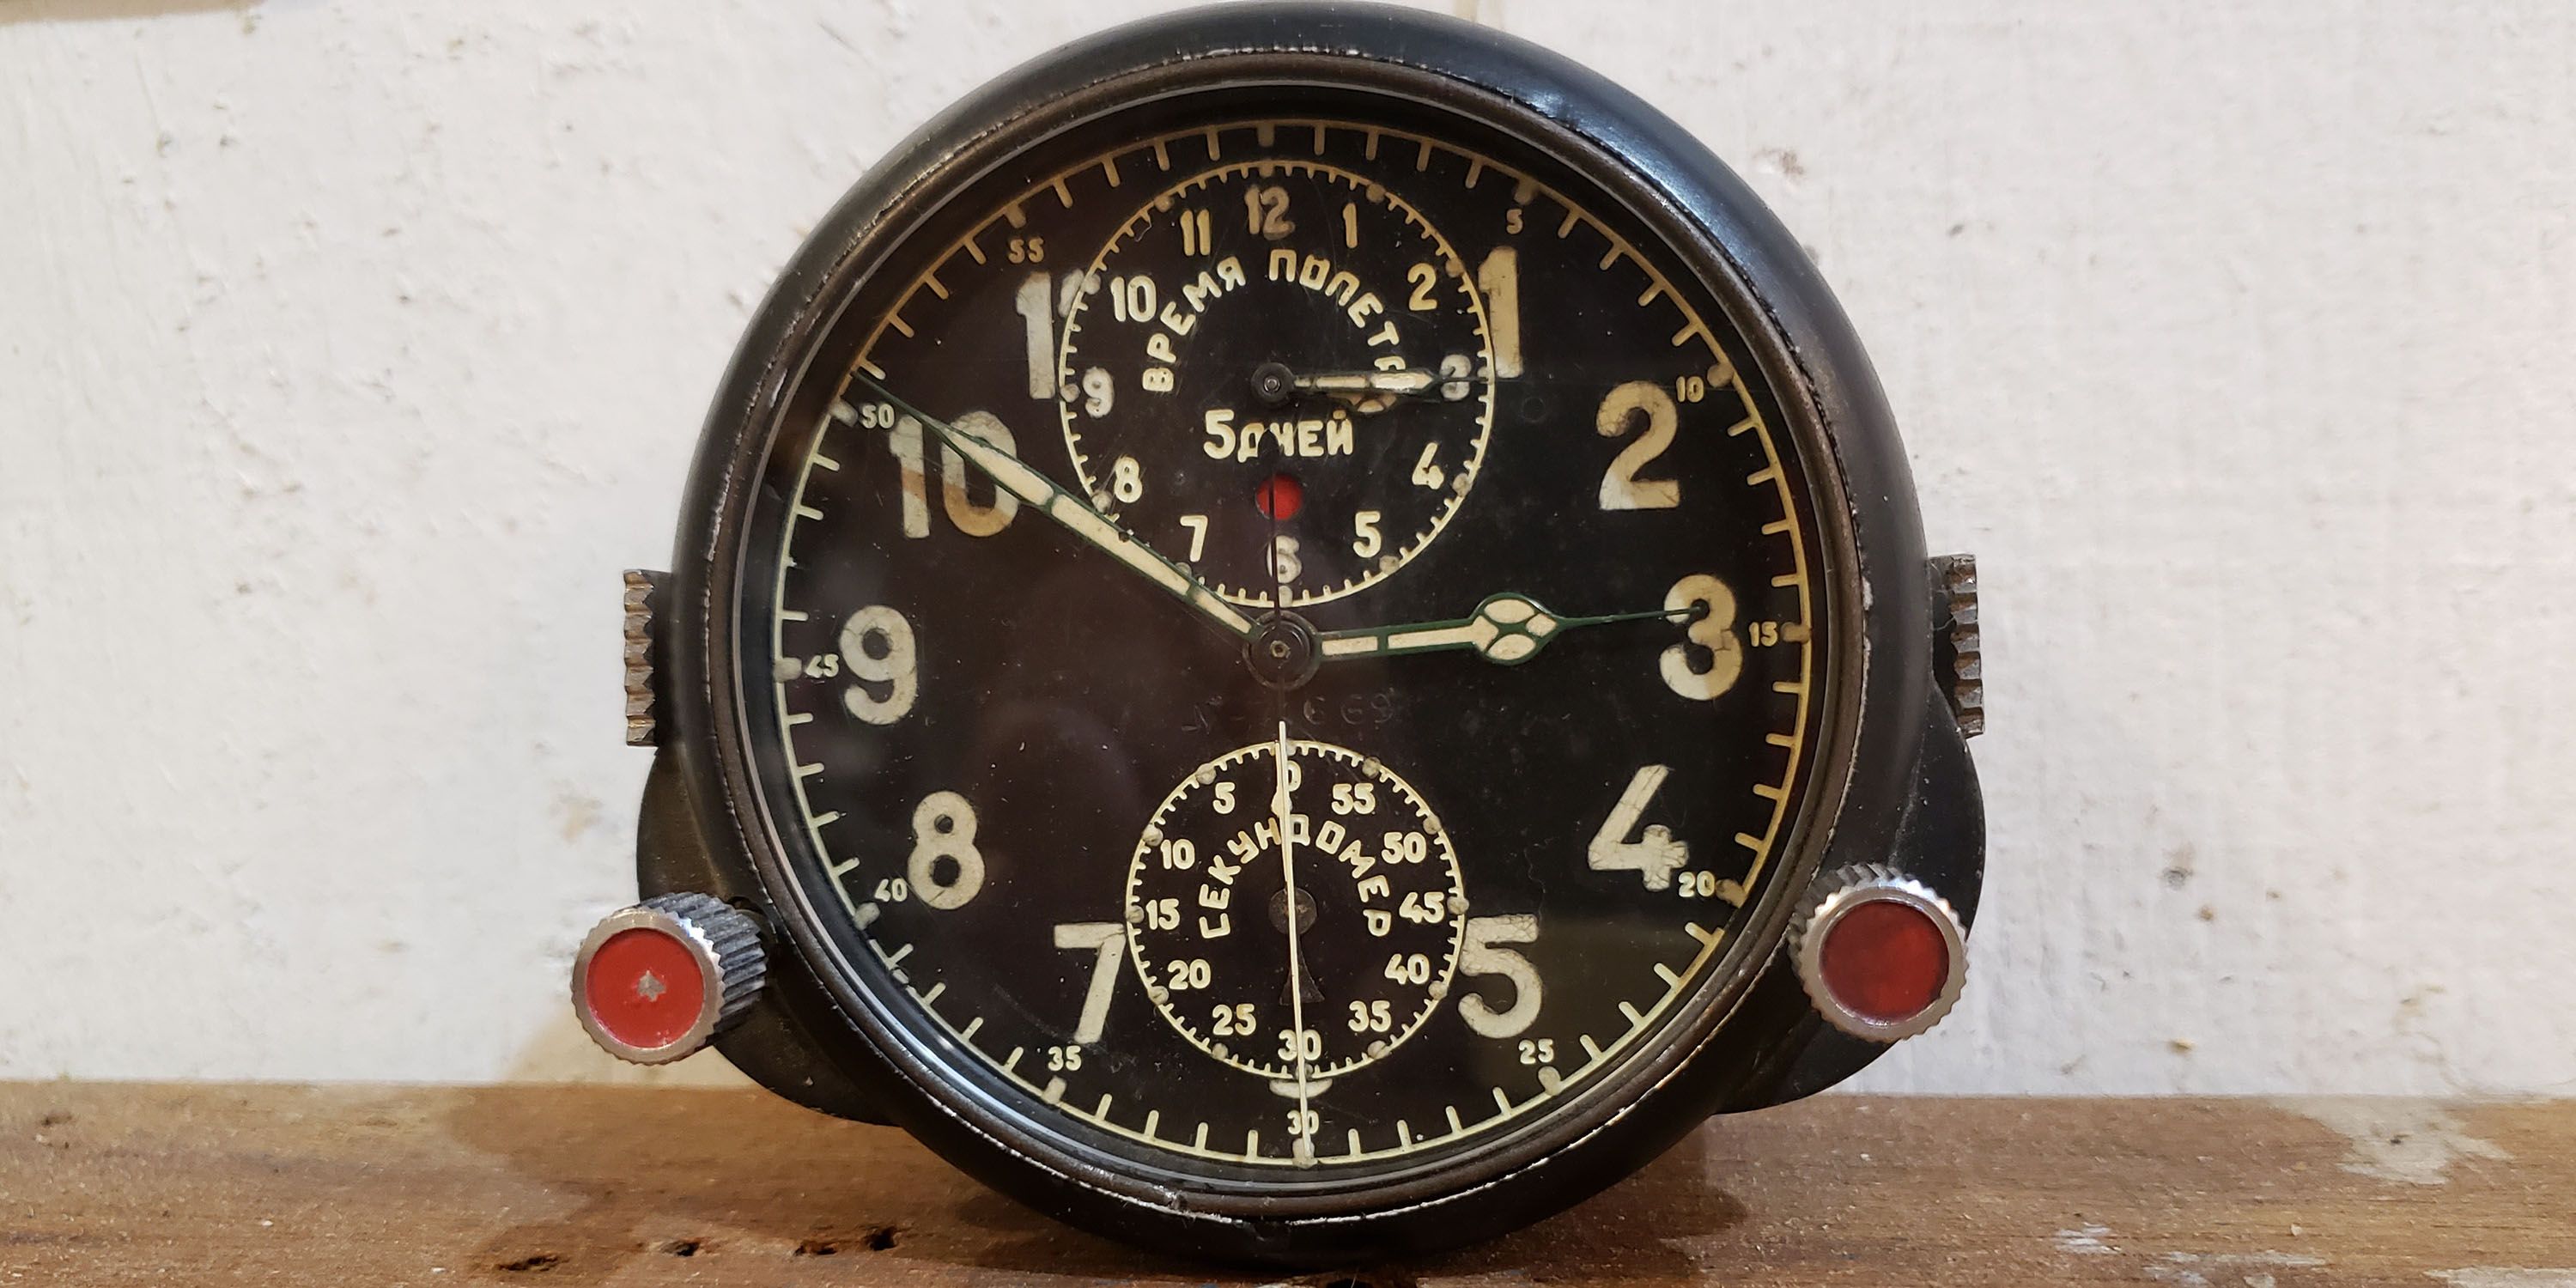 Aircraft clock stand aviation,Su mig,russian mig,aircraft clocks,wood stands